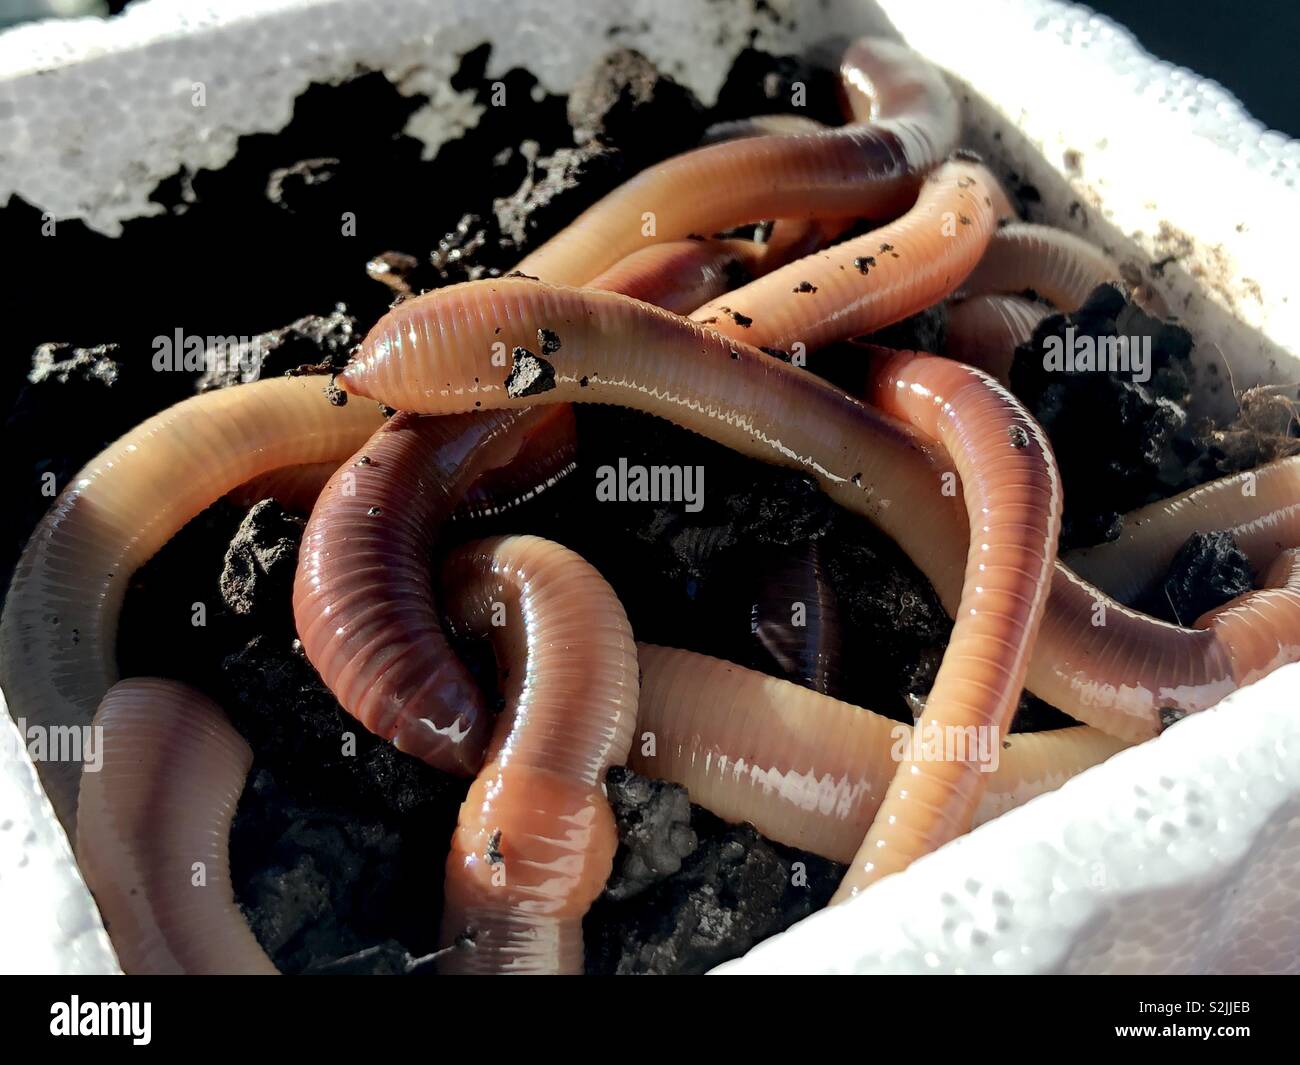 Worms African Night Crawler On Soils Stock Photo 581312476